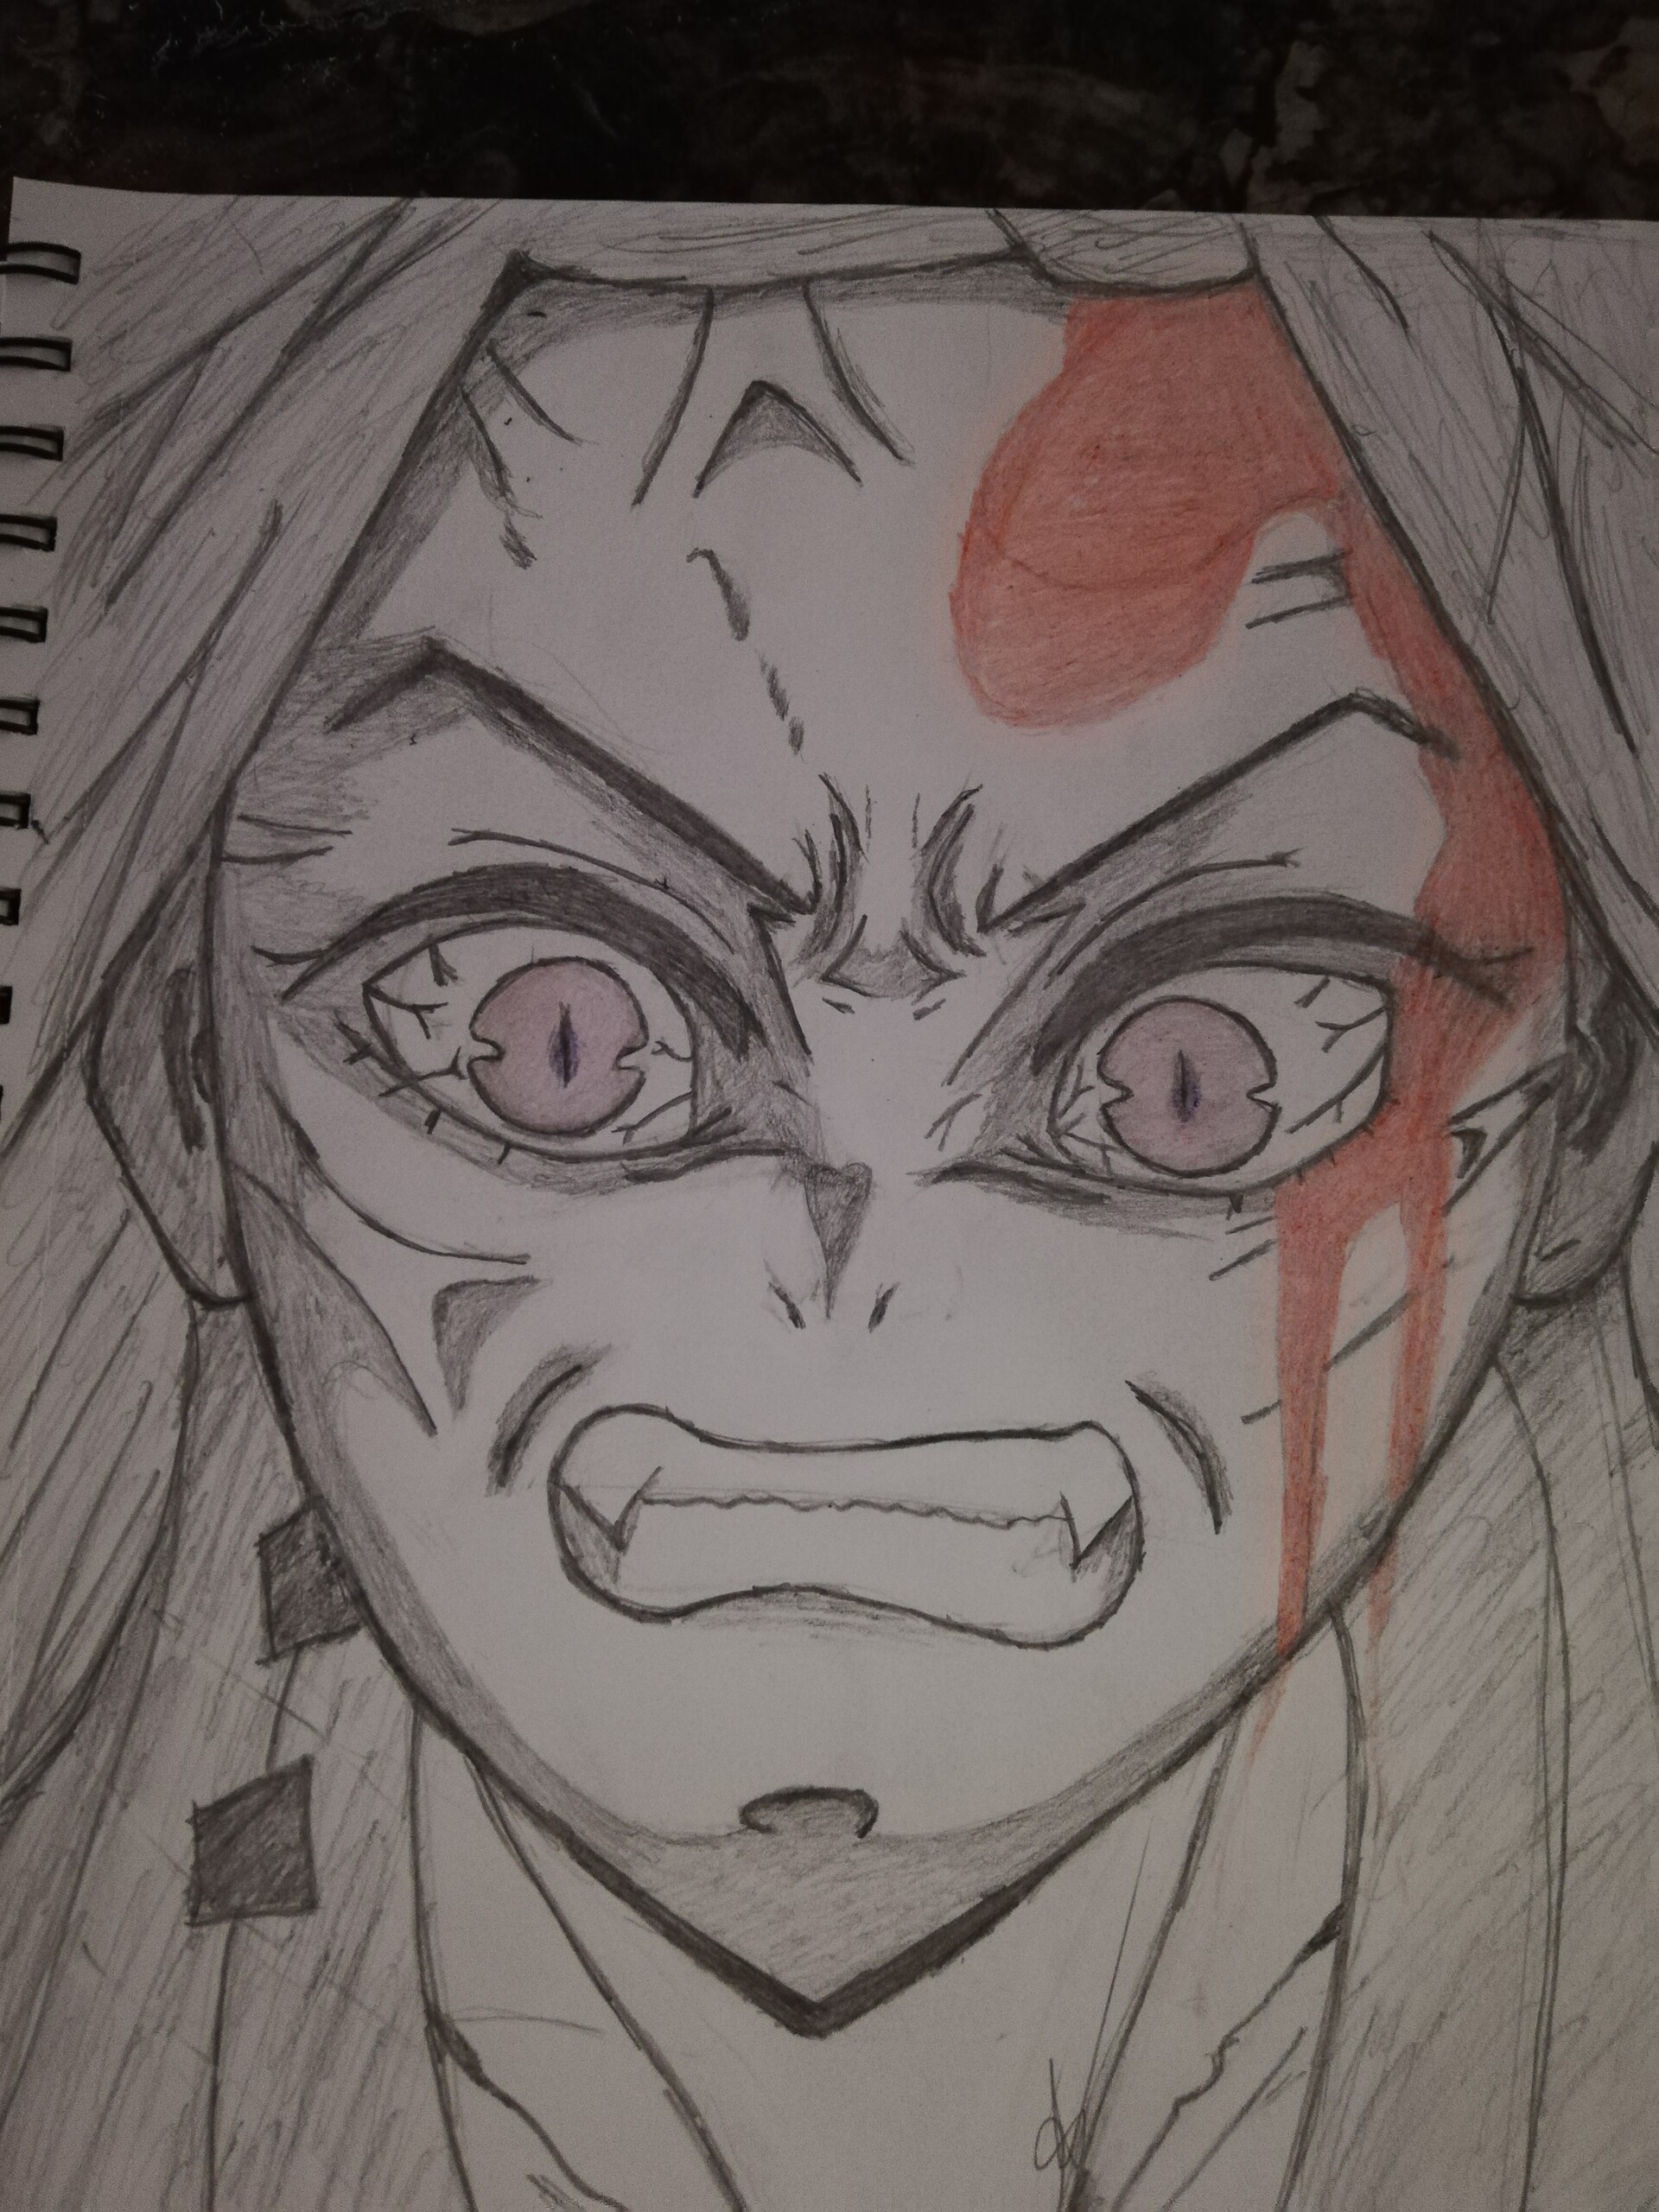 Angry Anime Girl by Aariulet on DeviantArt